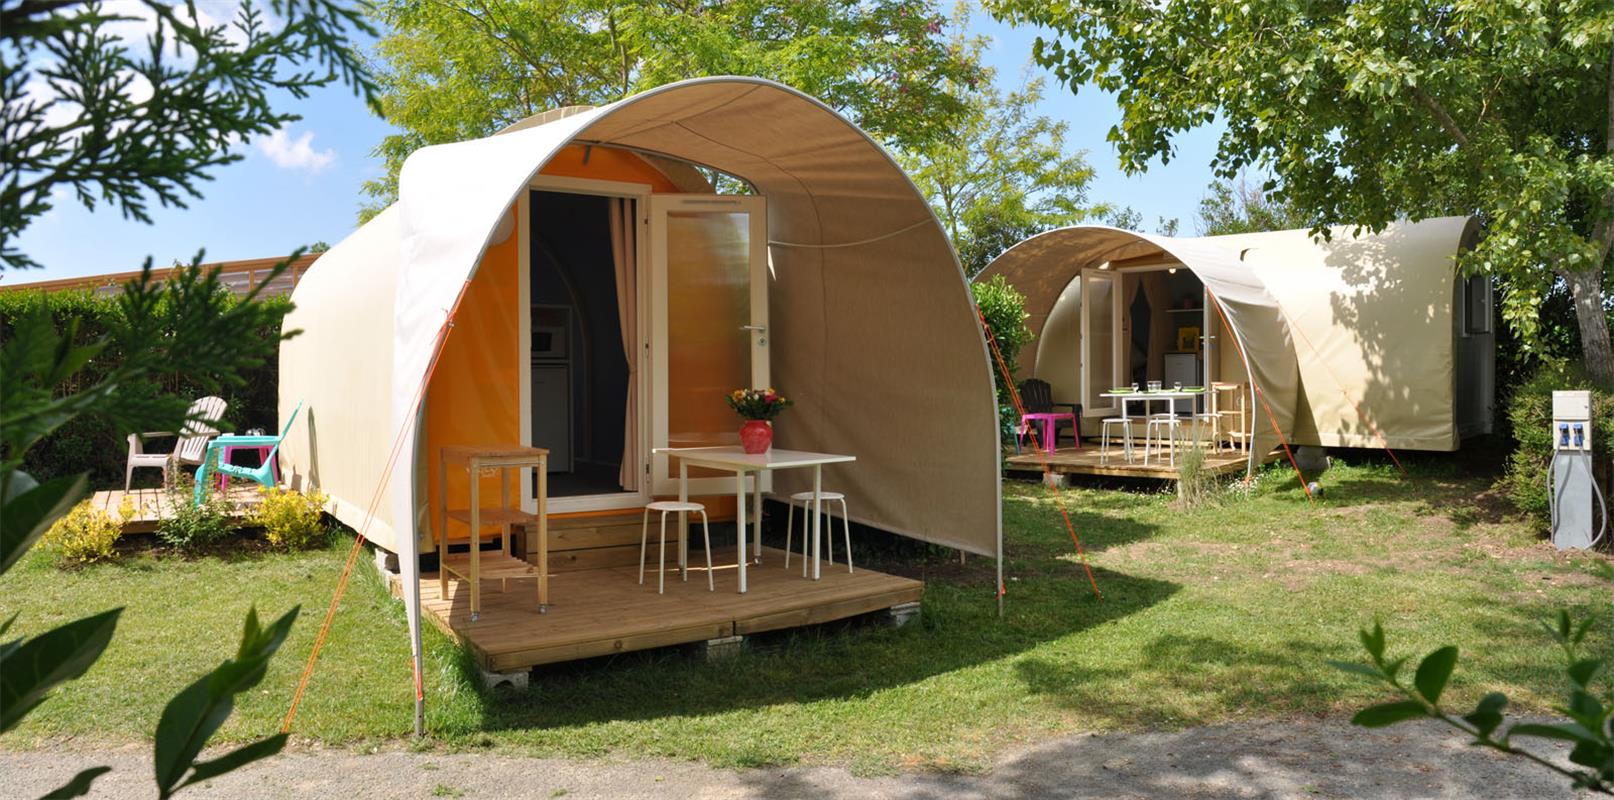 Accommodation - Insolite 1 - Camping Les Plages de l'Ain